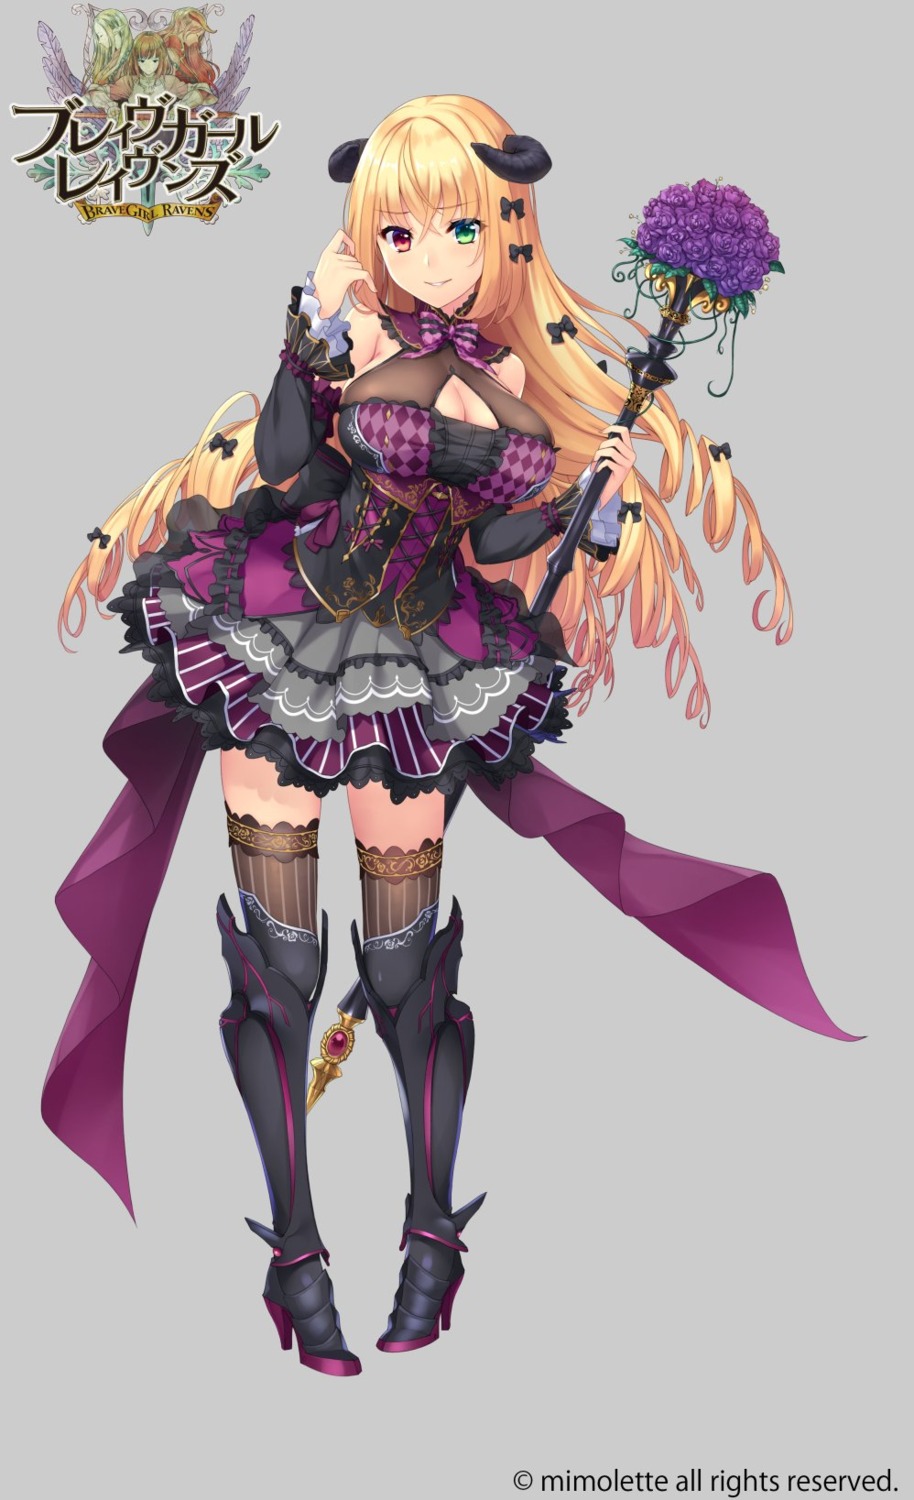 armor brave_girl_ravens cleavage dress heels heterochromia horns ikkei_(bobusuman) thighhighs weapon